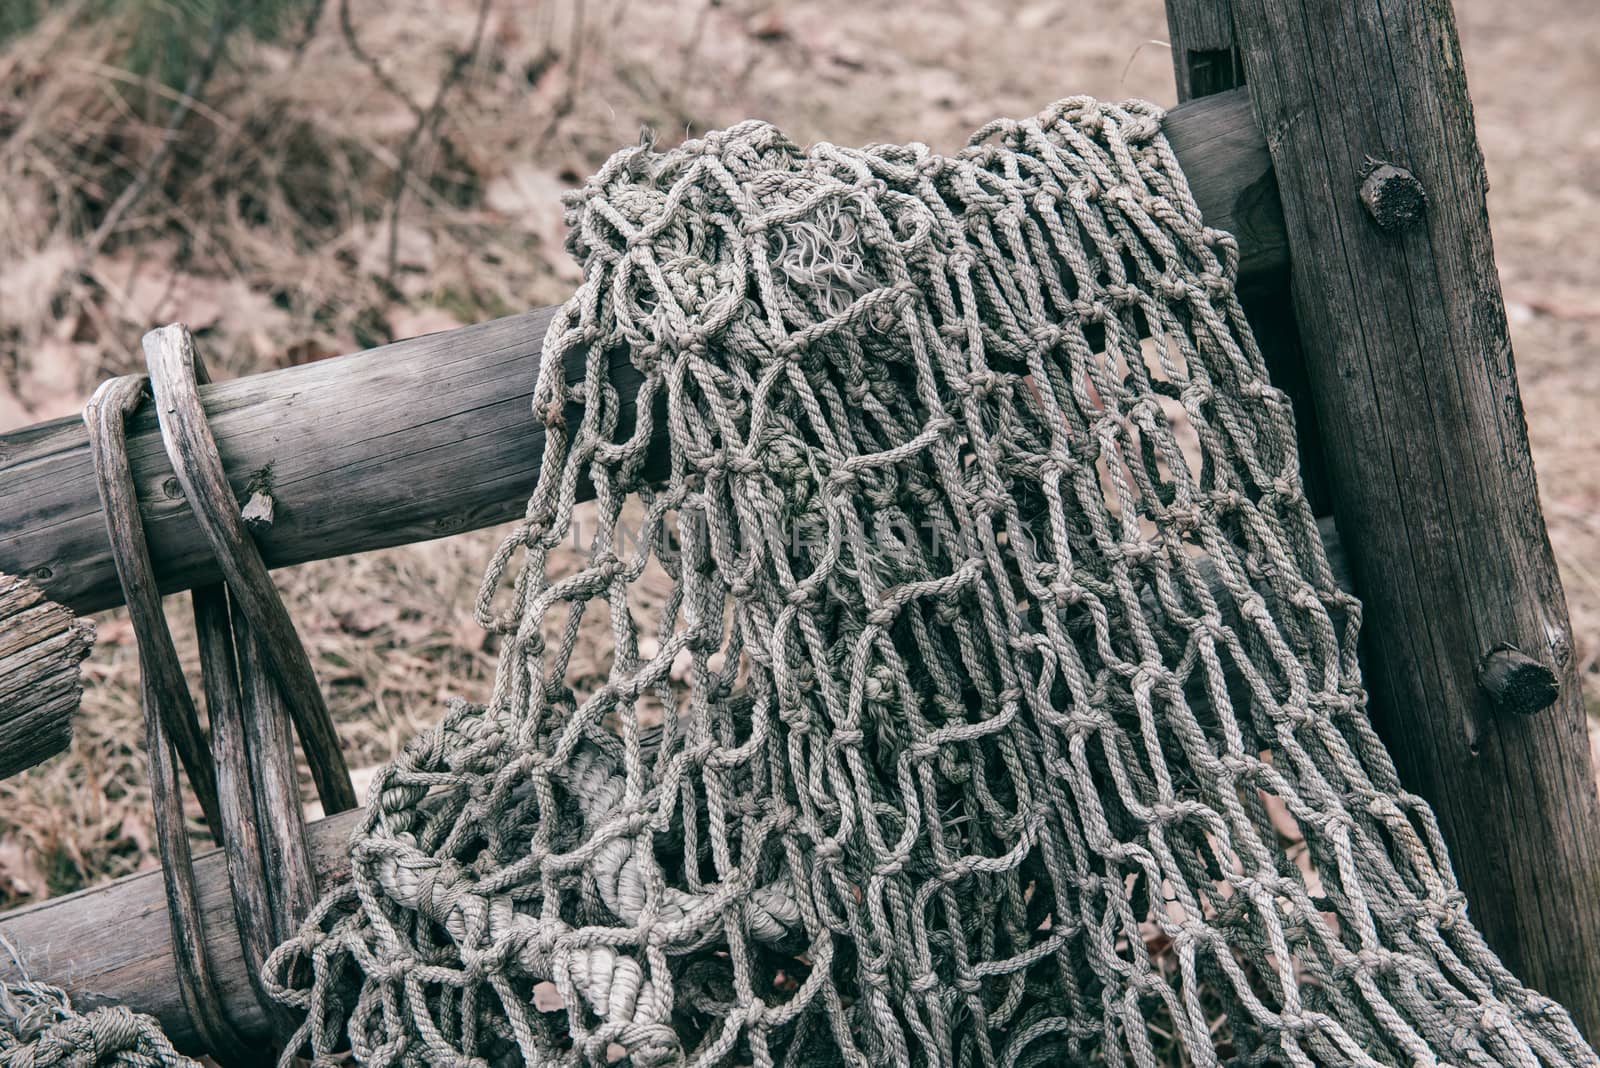 Fishing old network, fishing net texture of fisherman folk by infinityyy